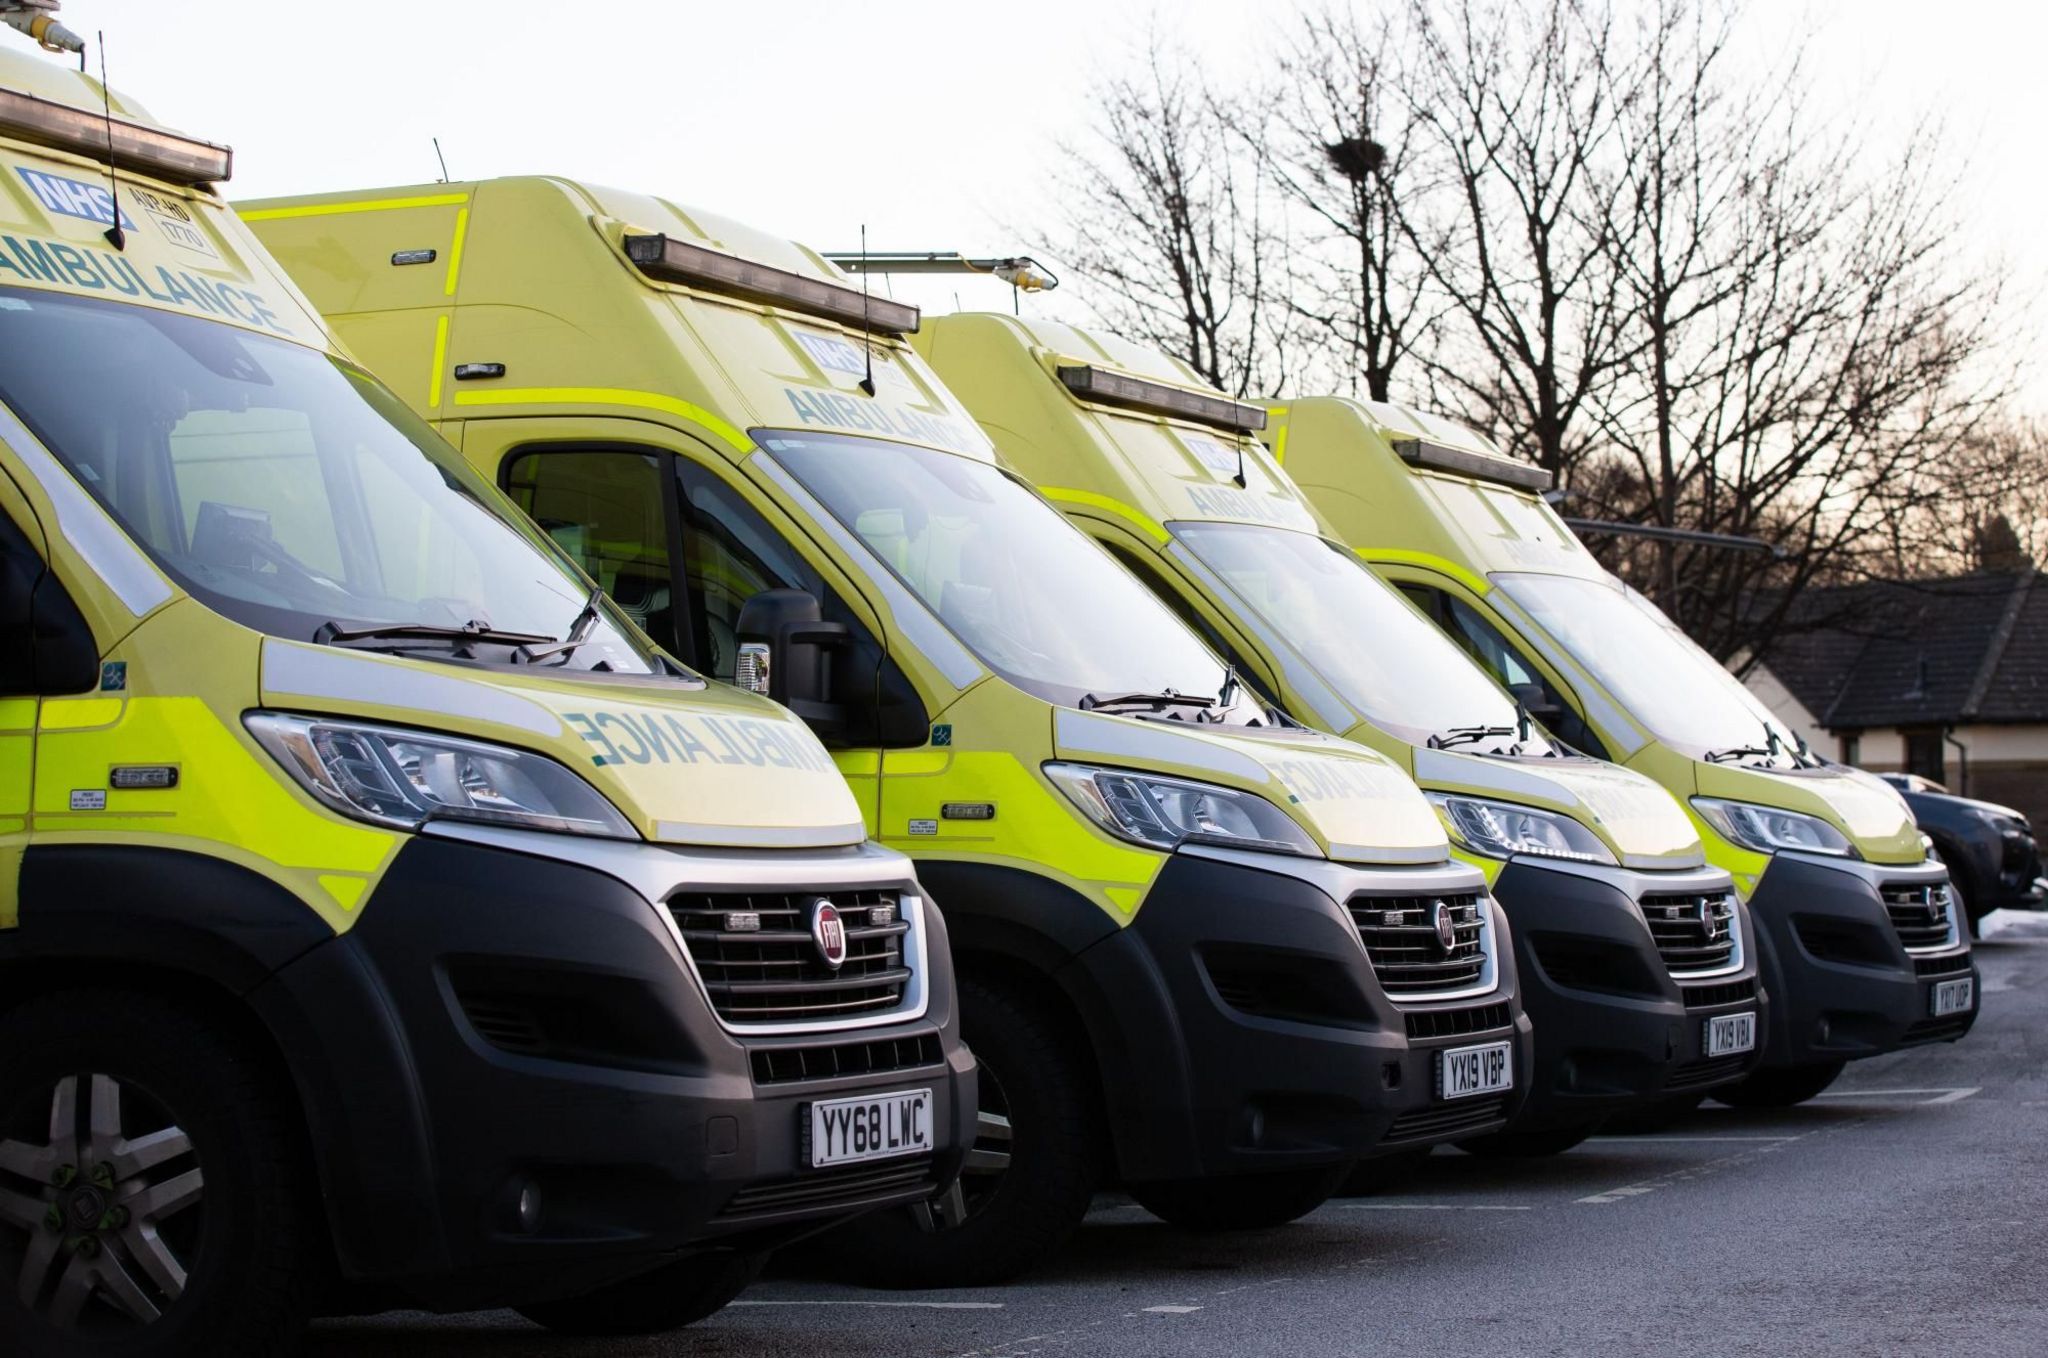 Four ambulances parked up at an ambulance station